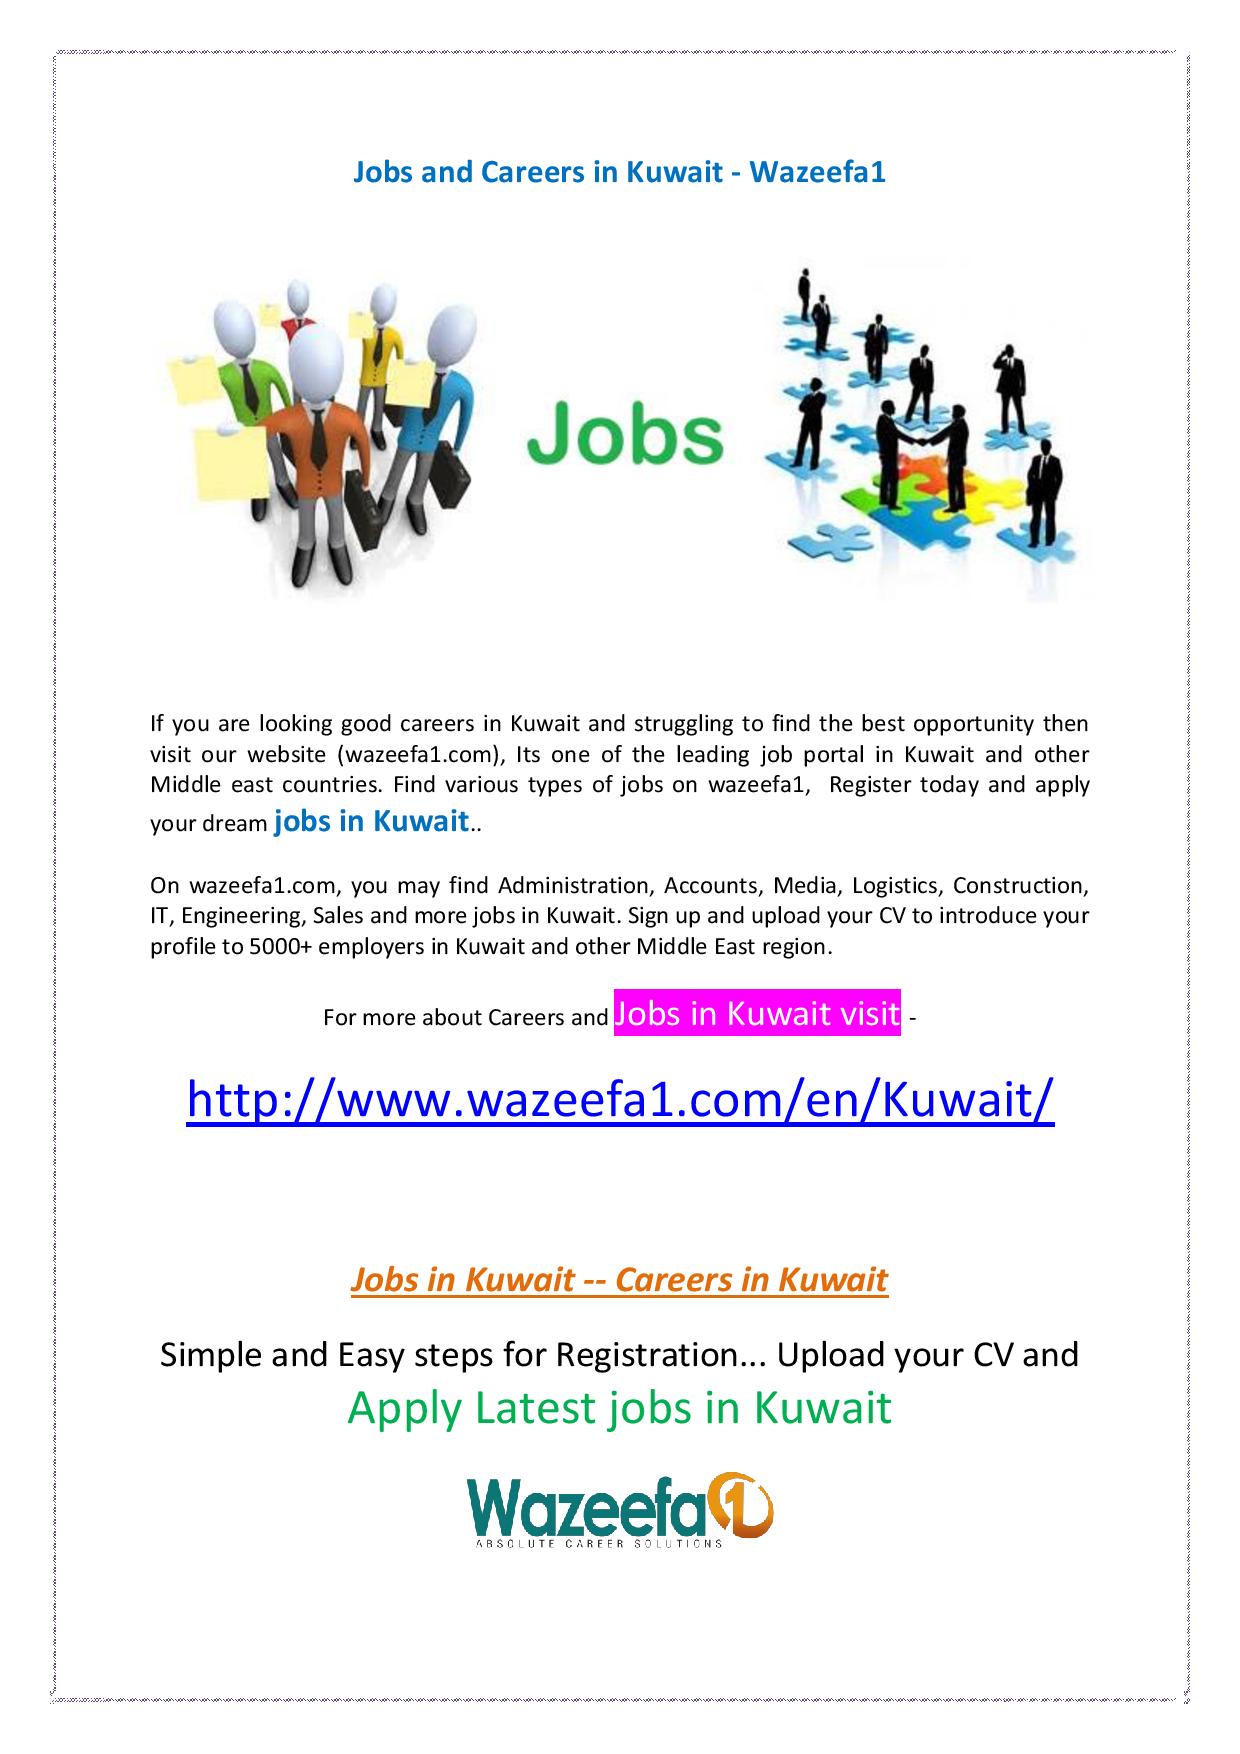 Recruitment coordinator jobs in kuwait